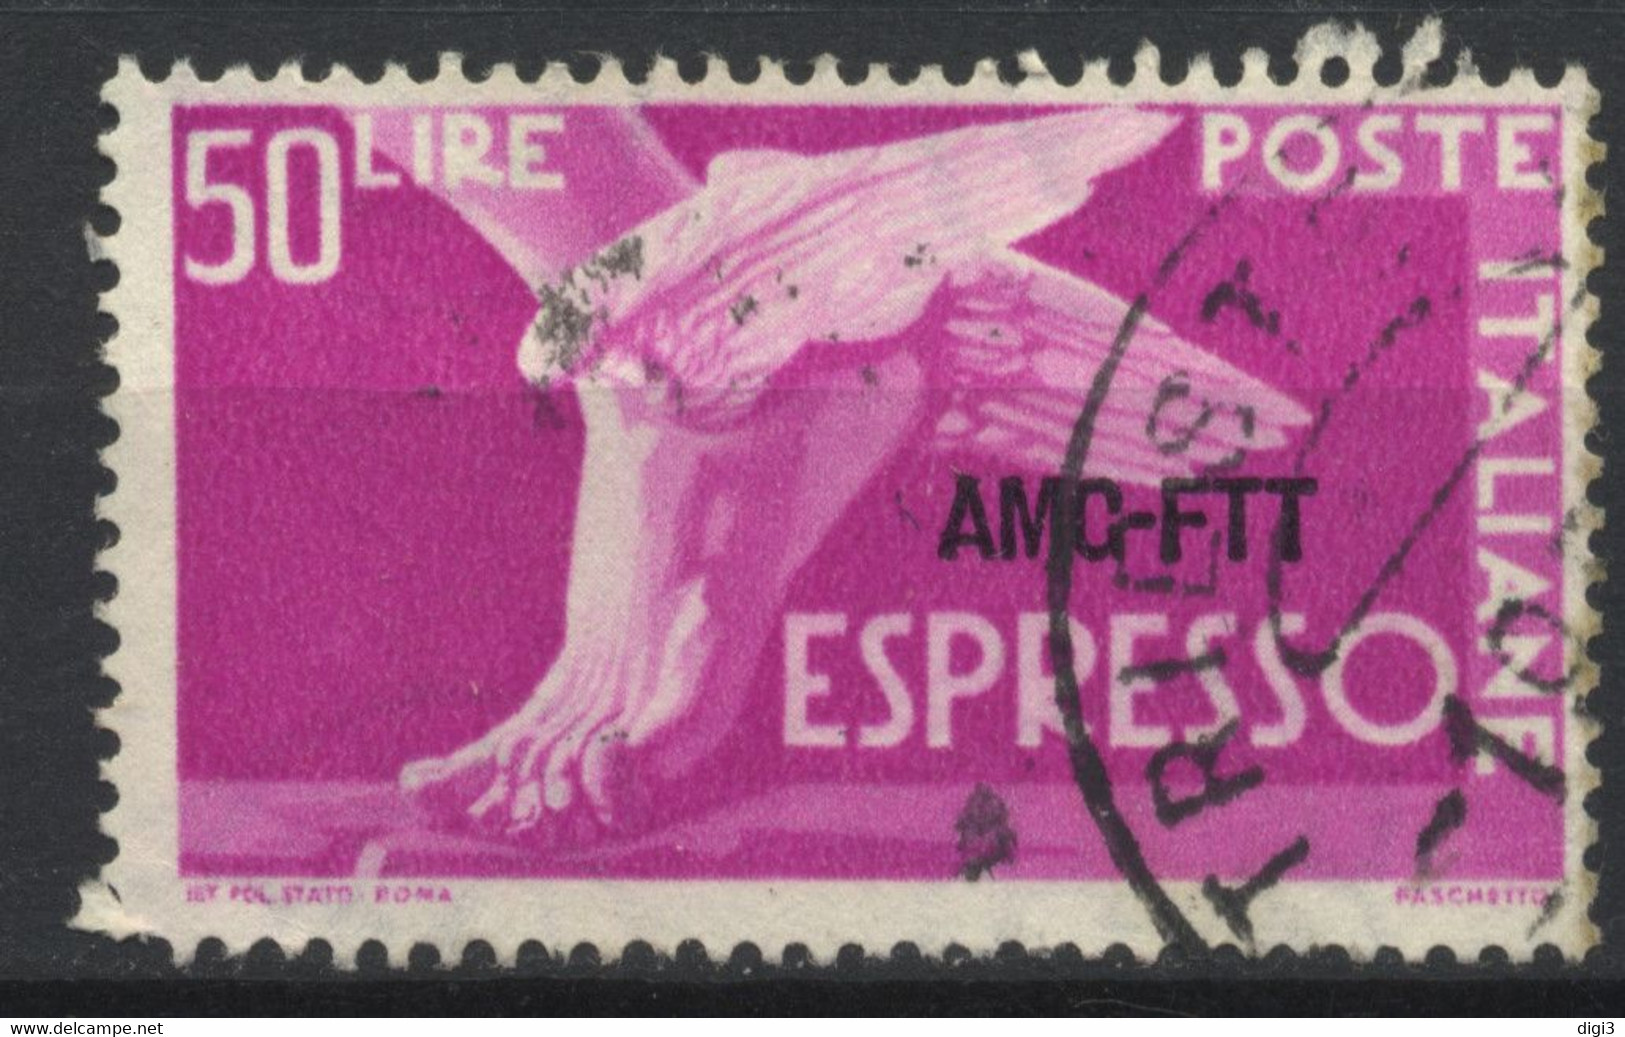 Trieste AMG-FTT, 1952, Democratica, Espresso, 50 L., Usato - Express Mail